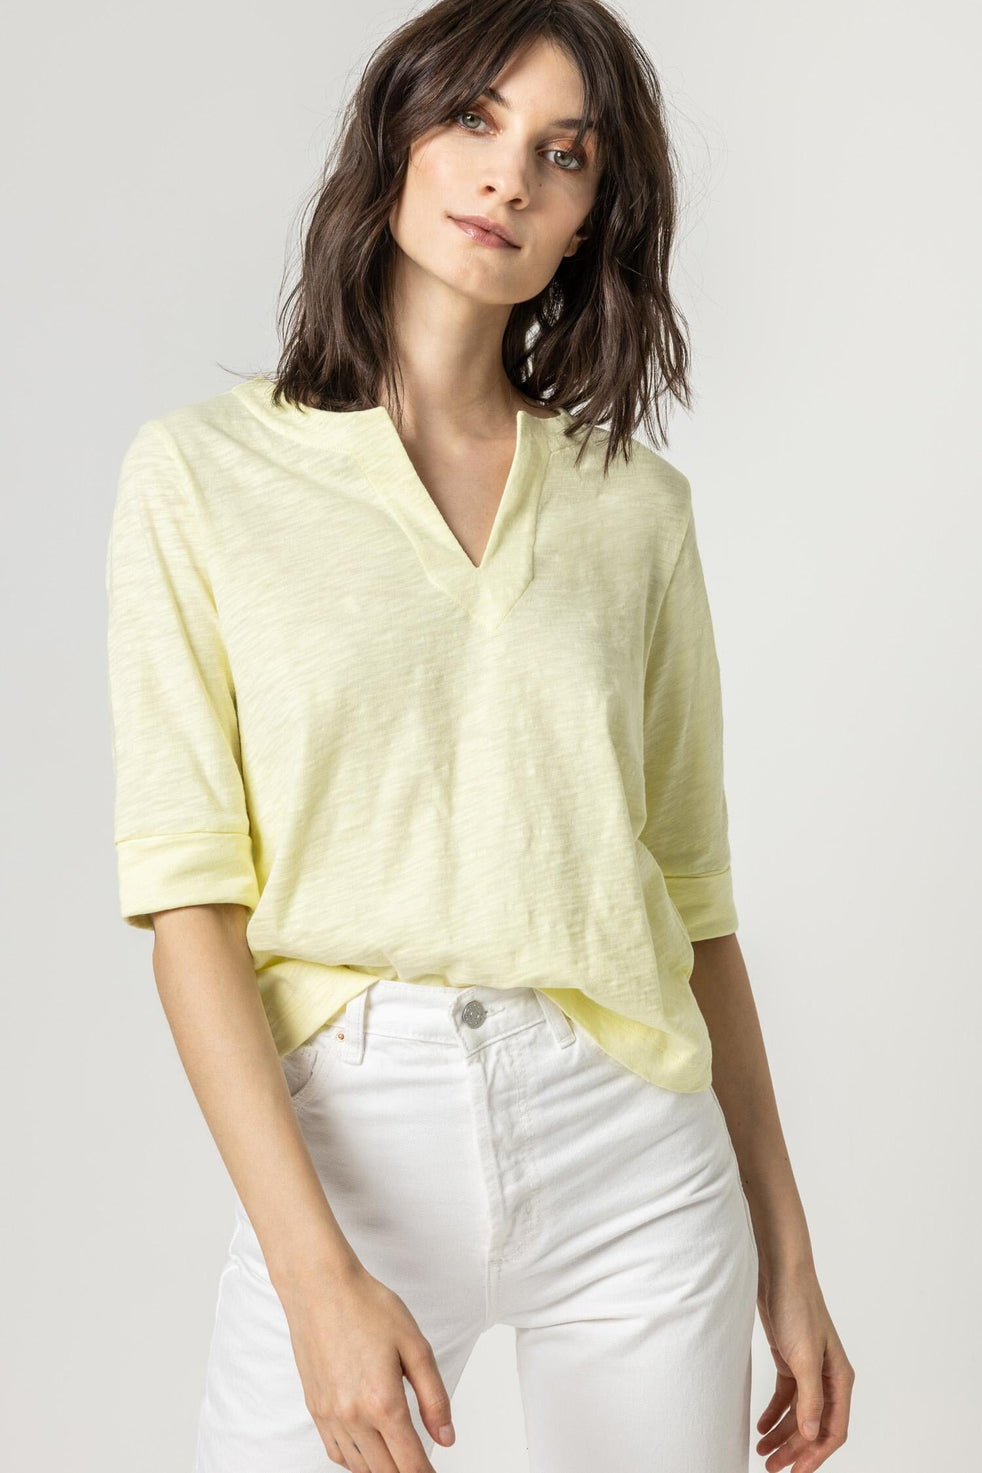 Tops on Women Sale | for & Women\'s Short Cotton Long Shirts Sleeve